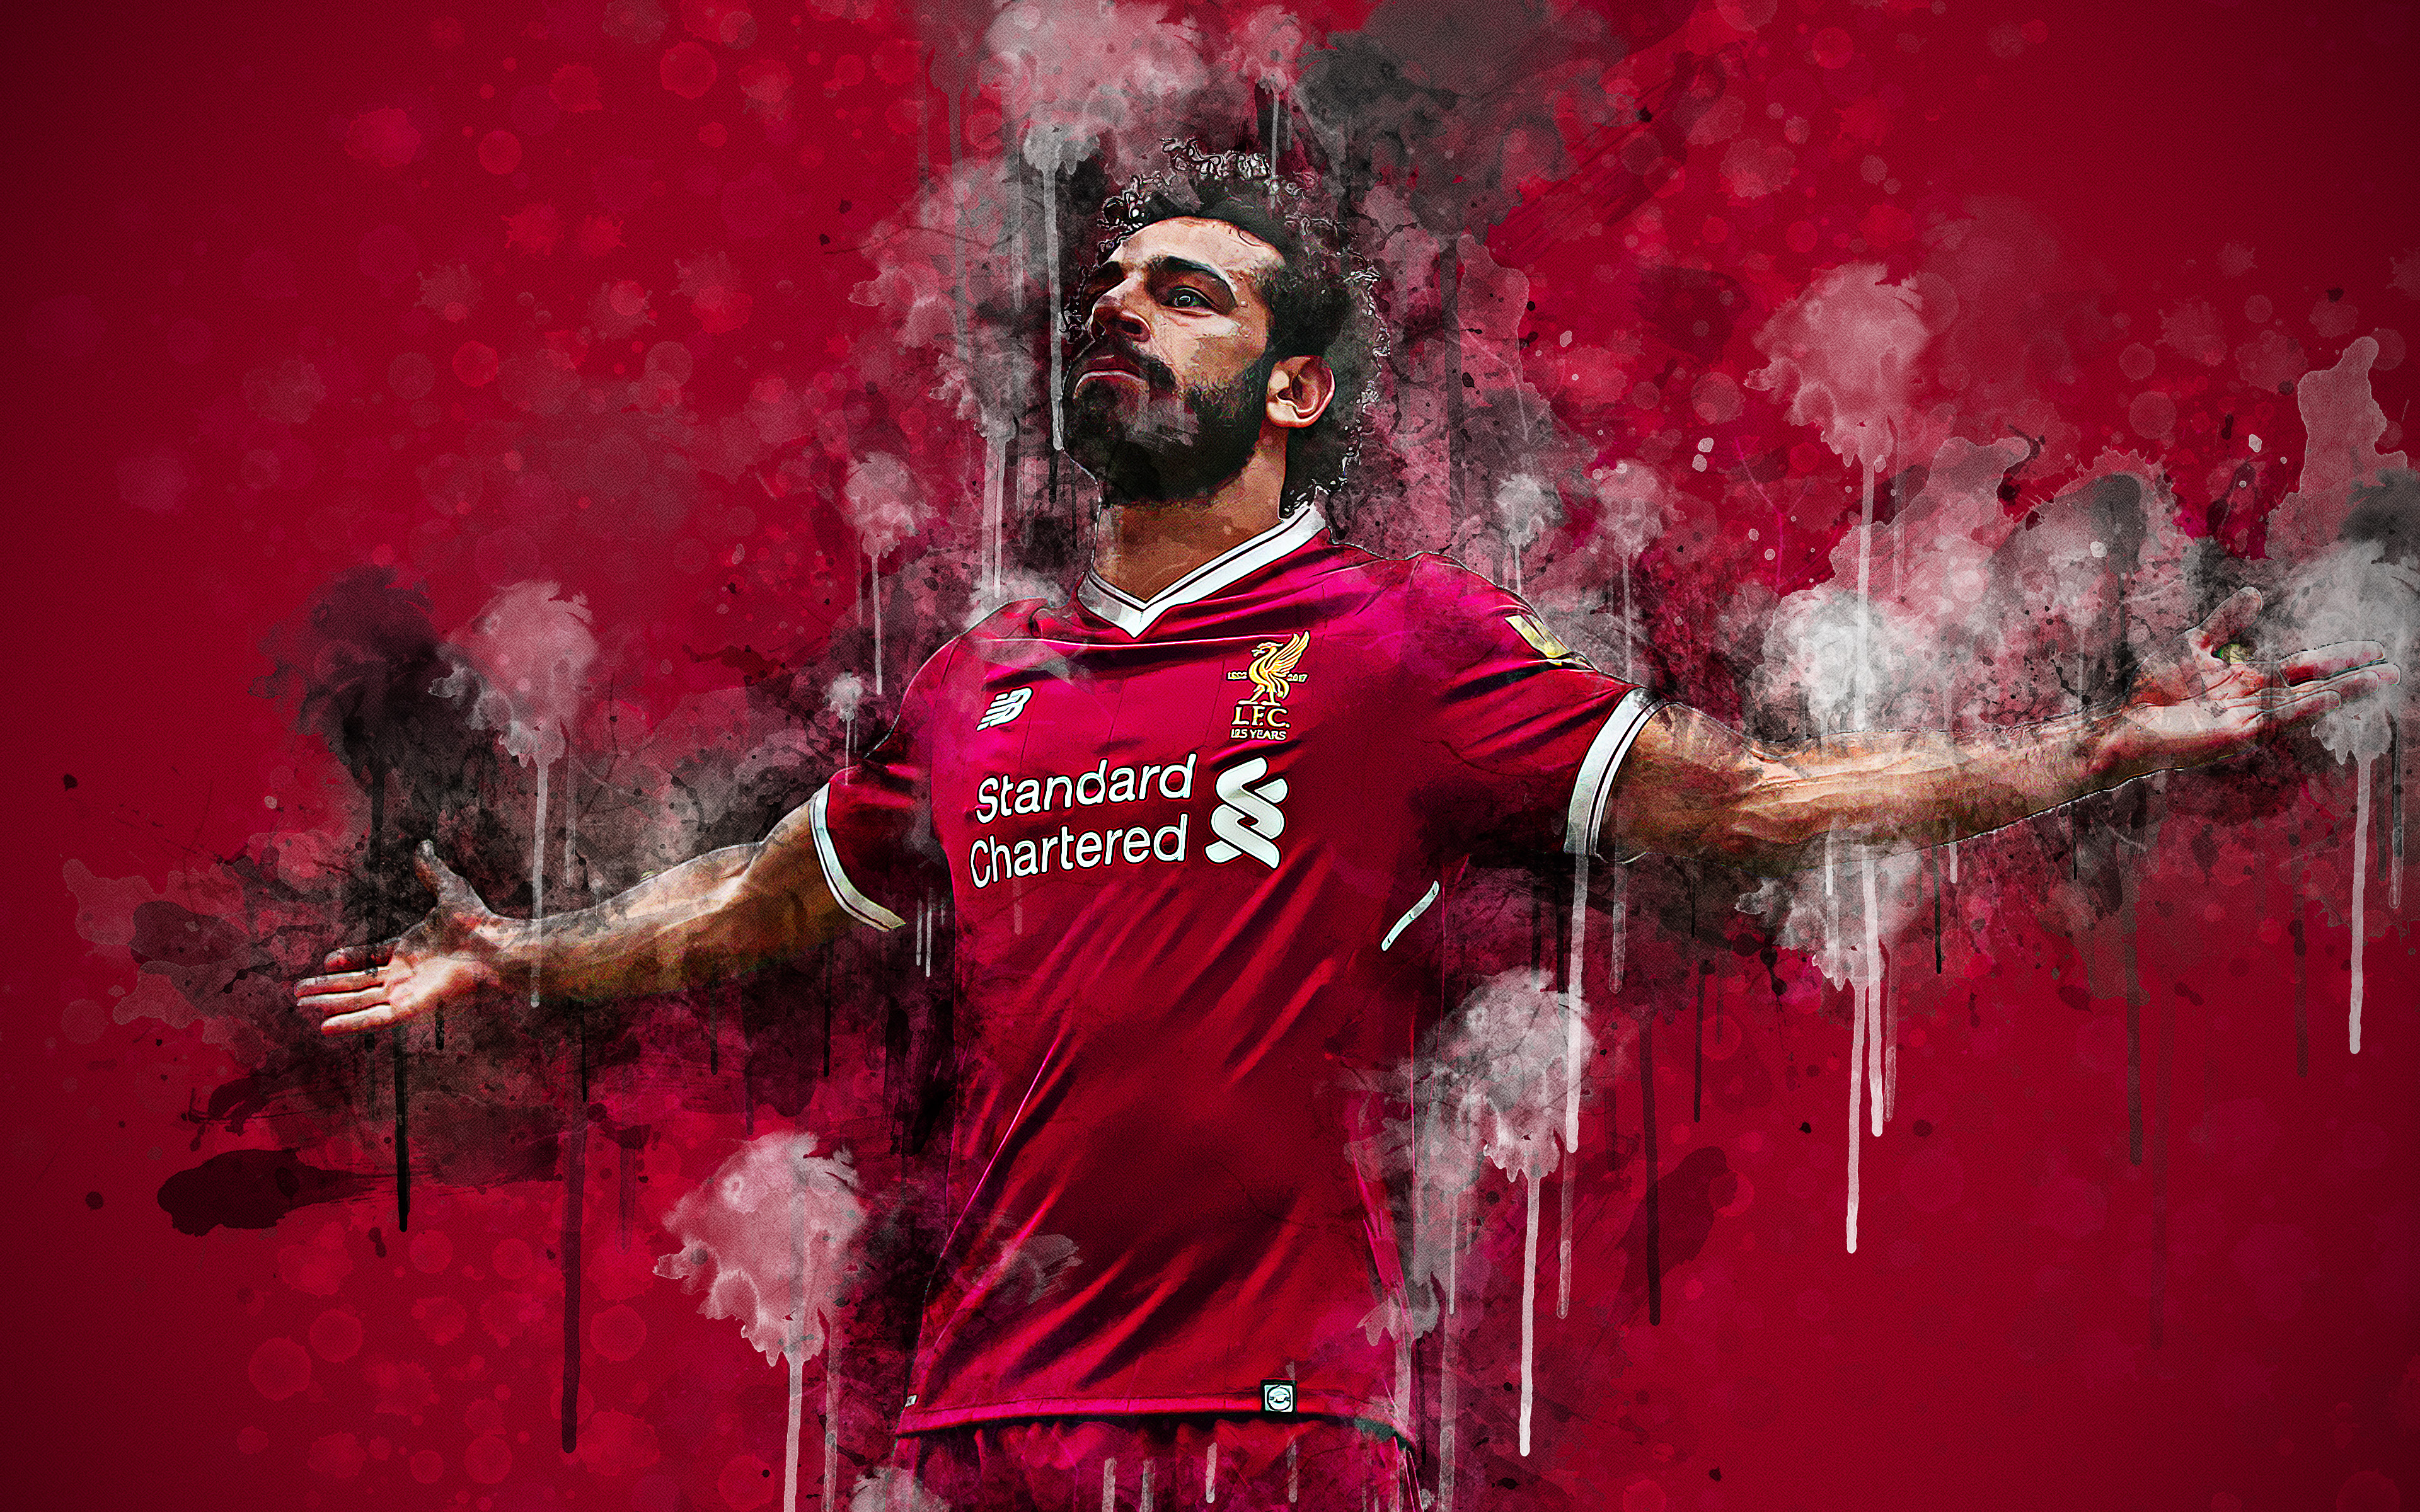 Sports Mohamed Salah HD Wallpaper | Background Image